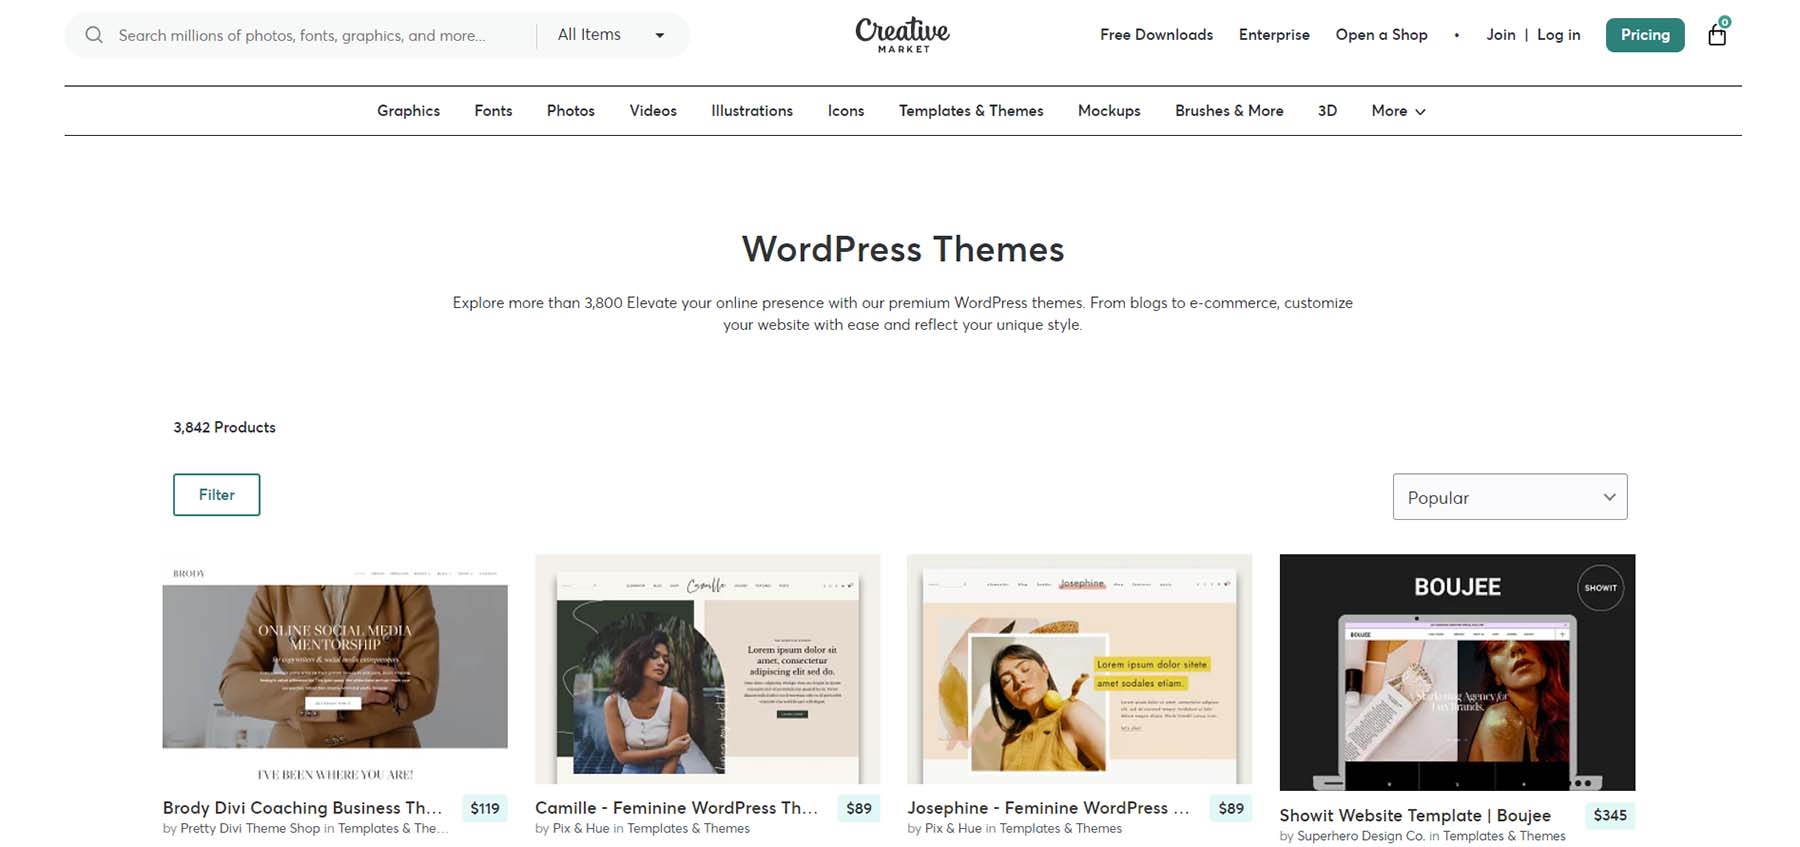 Creative Market WordPress Themes